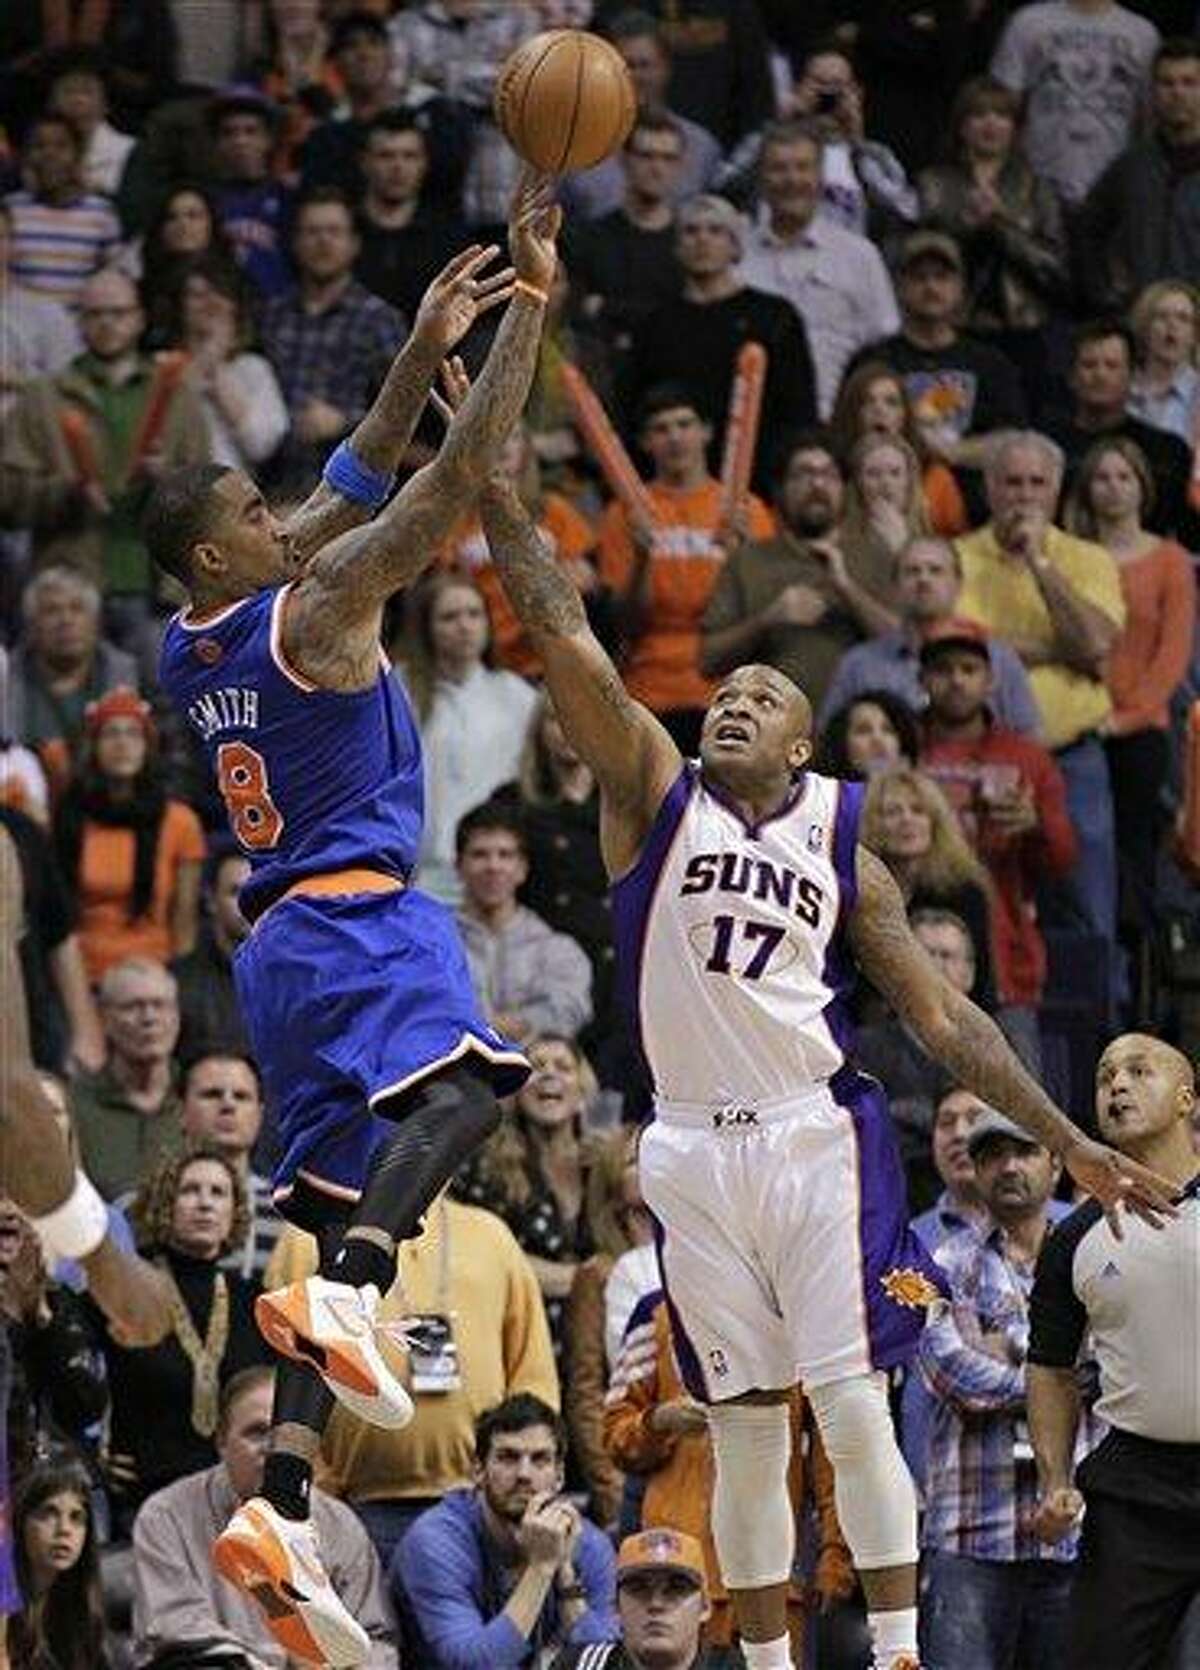 New York Knicks' J.R. Smith (9) takes the game-winning shot over Phoenix Suns' P.J. Tucker (17) during the second half of an NBA basketball game, Wednesday, Dec. 26, 2012, in Phoenix. The Knicks won 99-97. (AP Photo/Matt York)